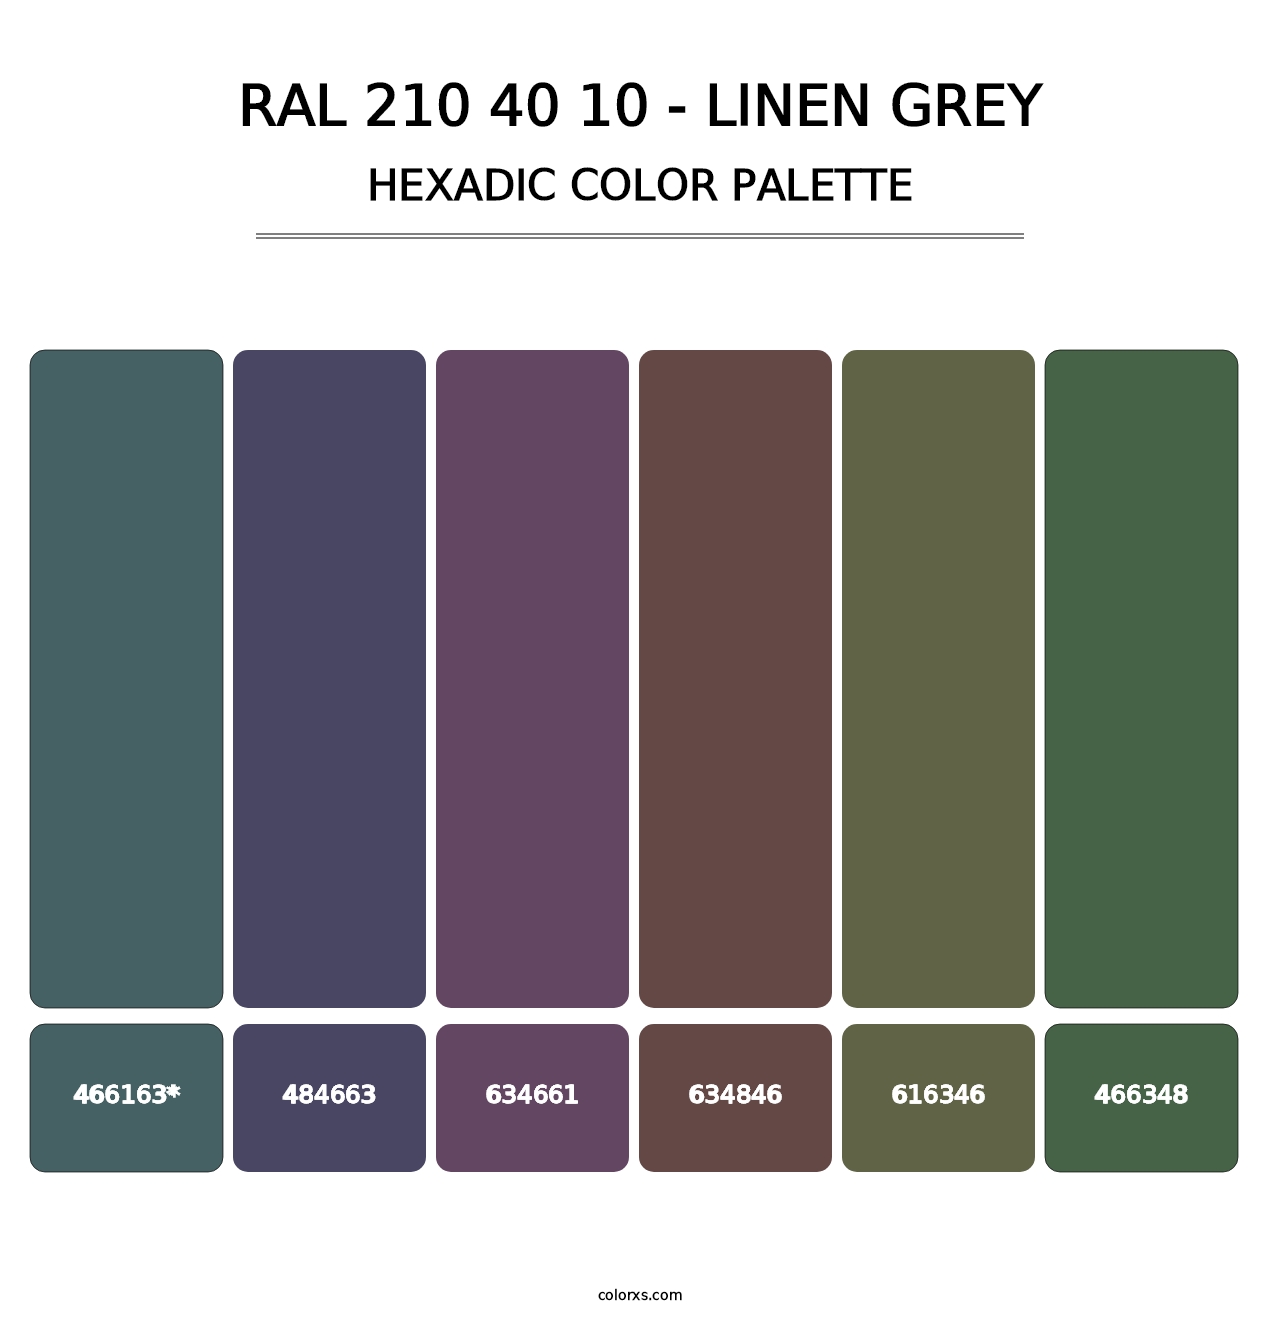 RAL 210 40 10 - Linen Grey - Hexadic Color Palette